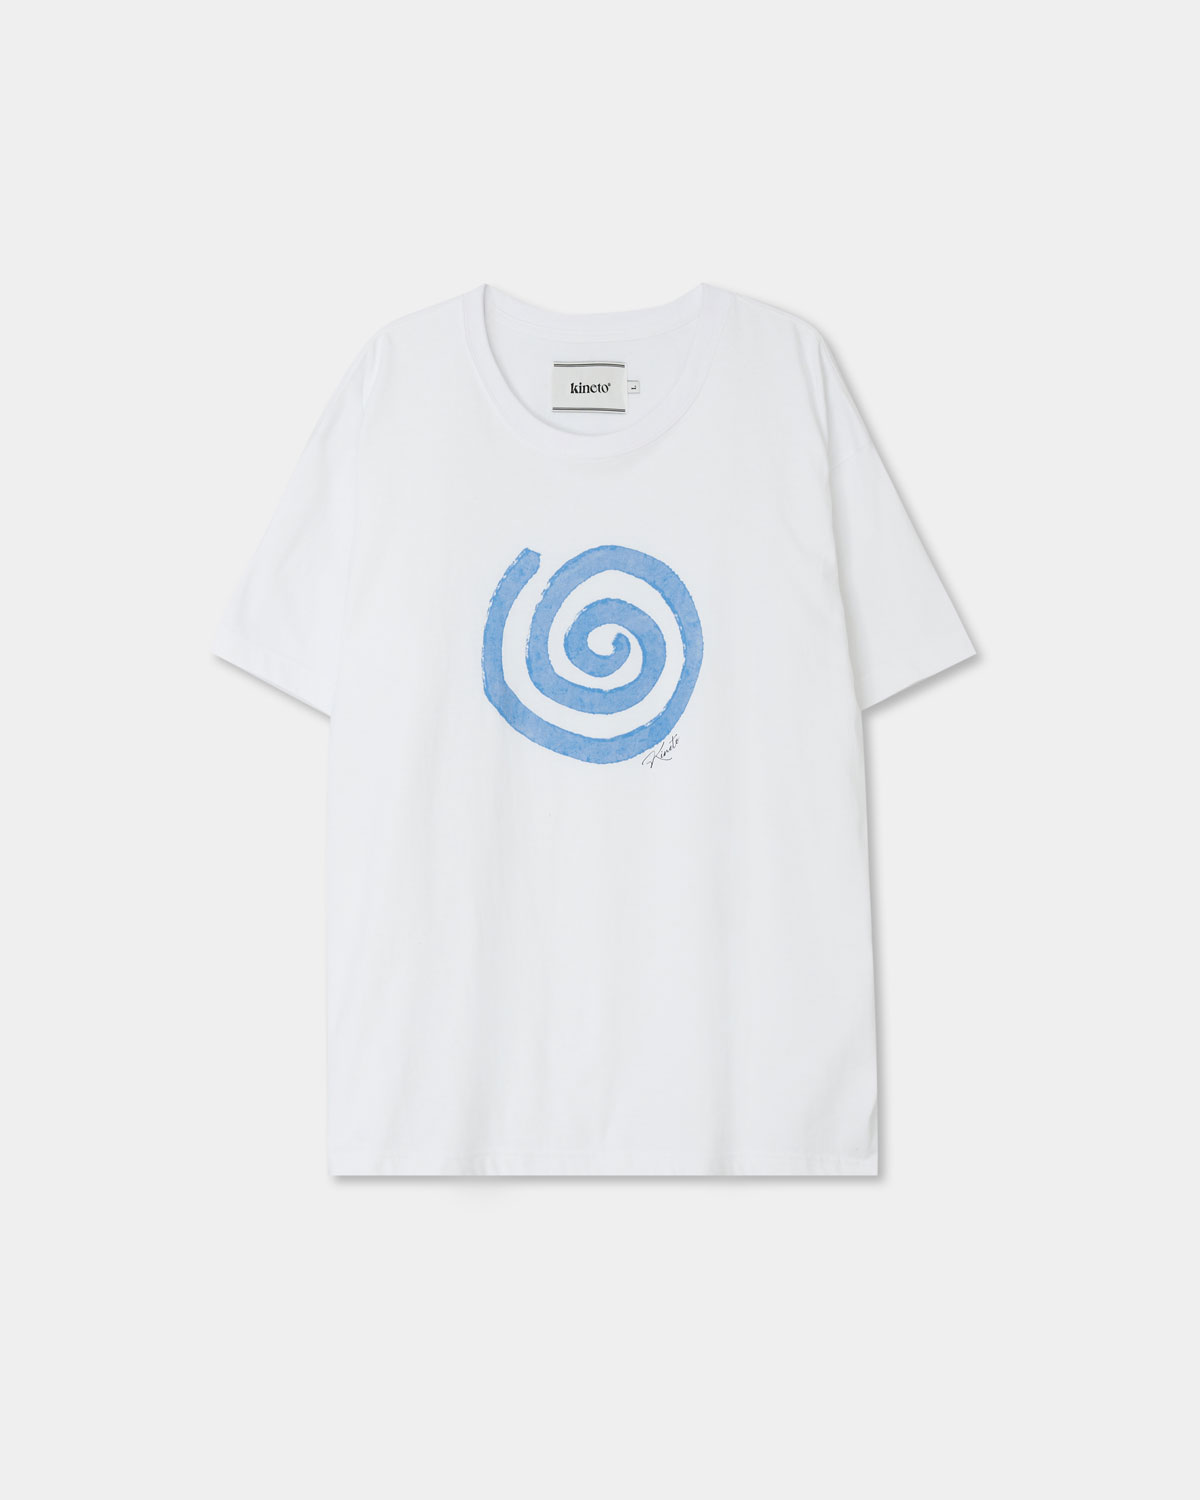 Blow Wind Print T-Shirt _White_예약 배송 05/13